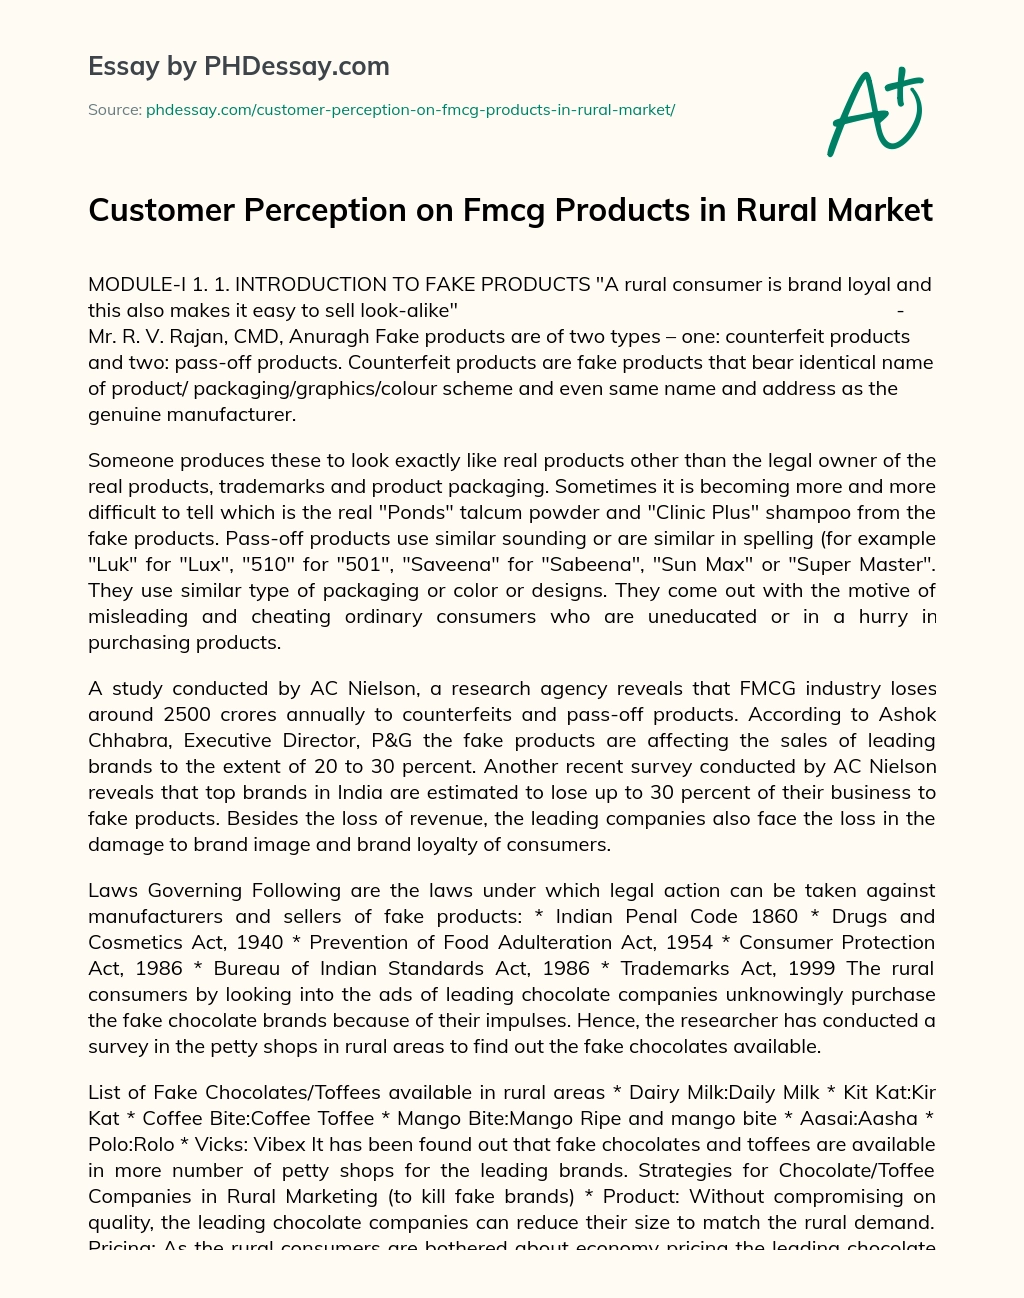 Customer Perception on FMCG Products in Rural Market essay